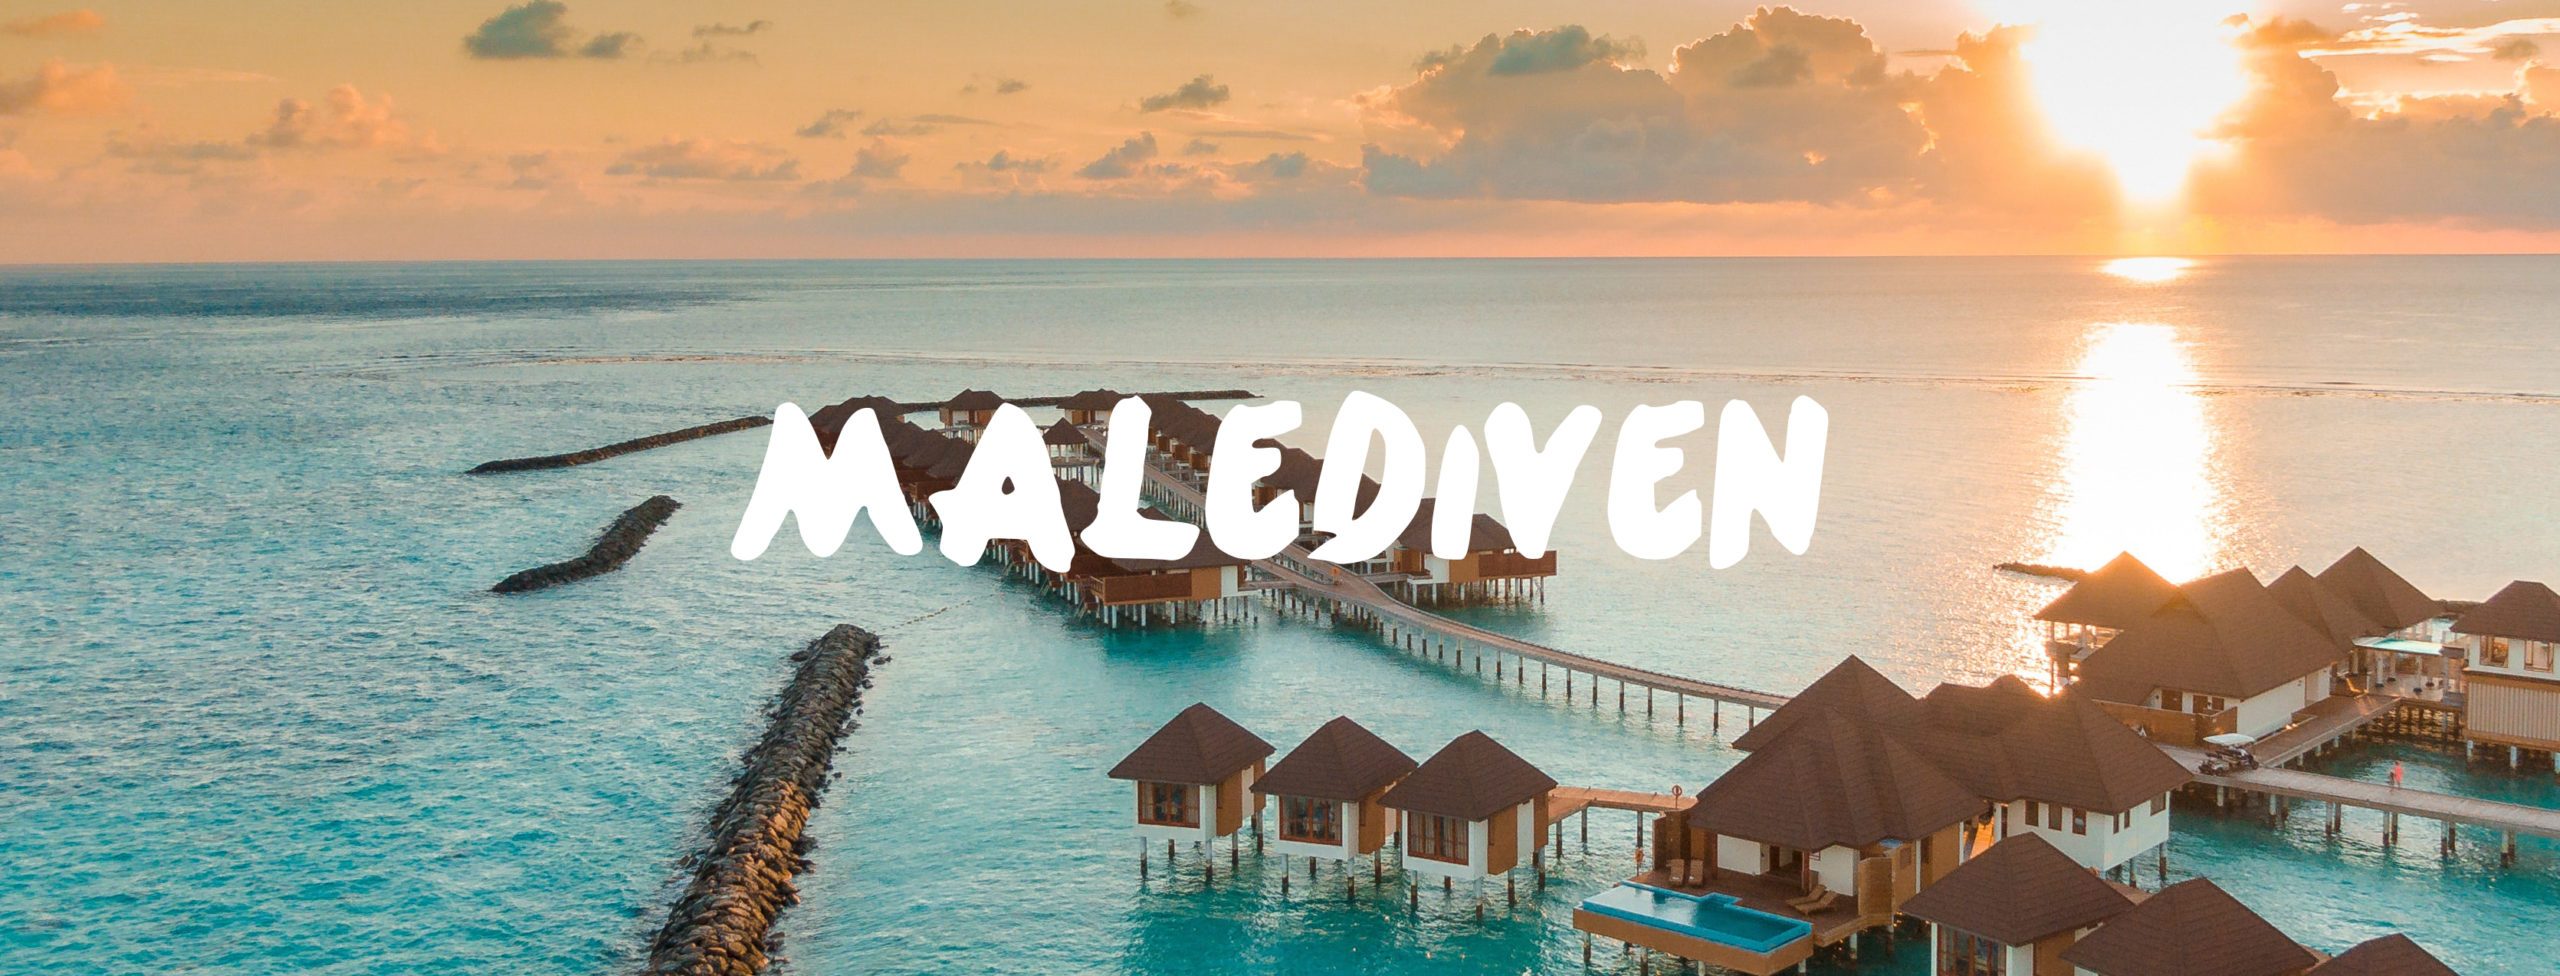 Malediven Urlaub buchen Reisebüro Rosenheim Raubling